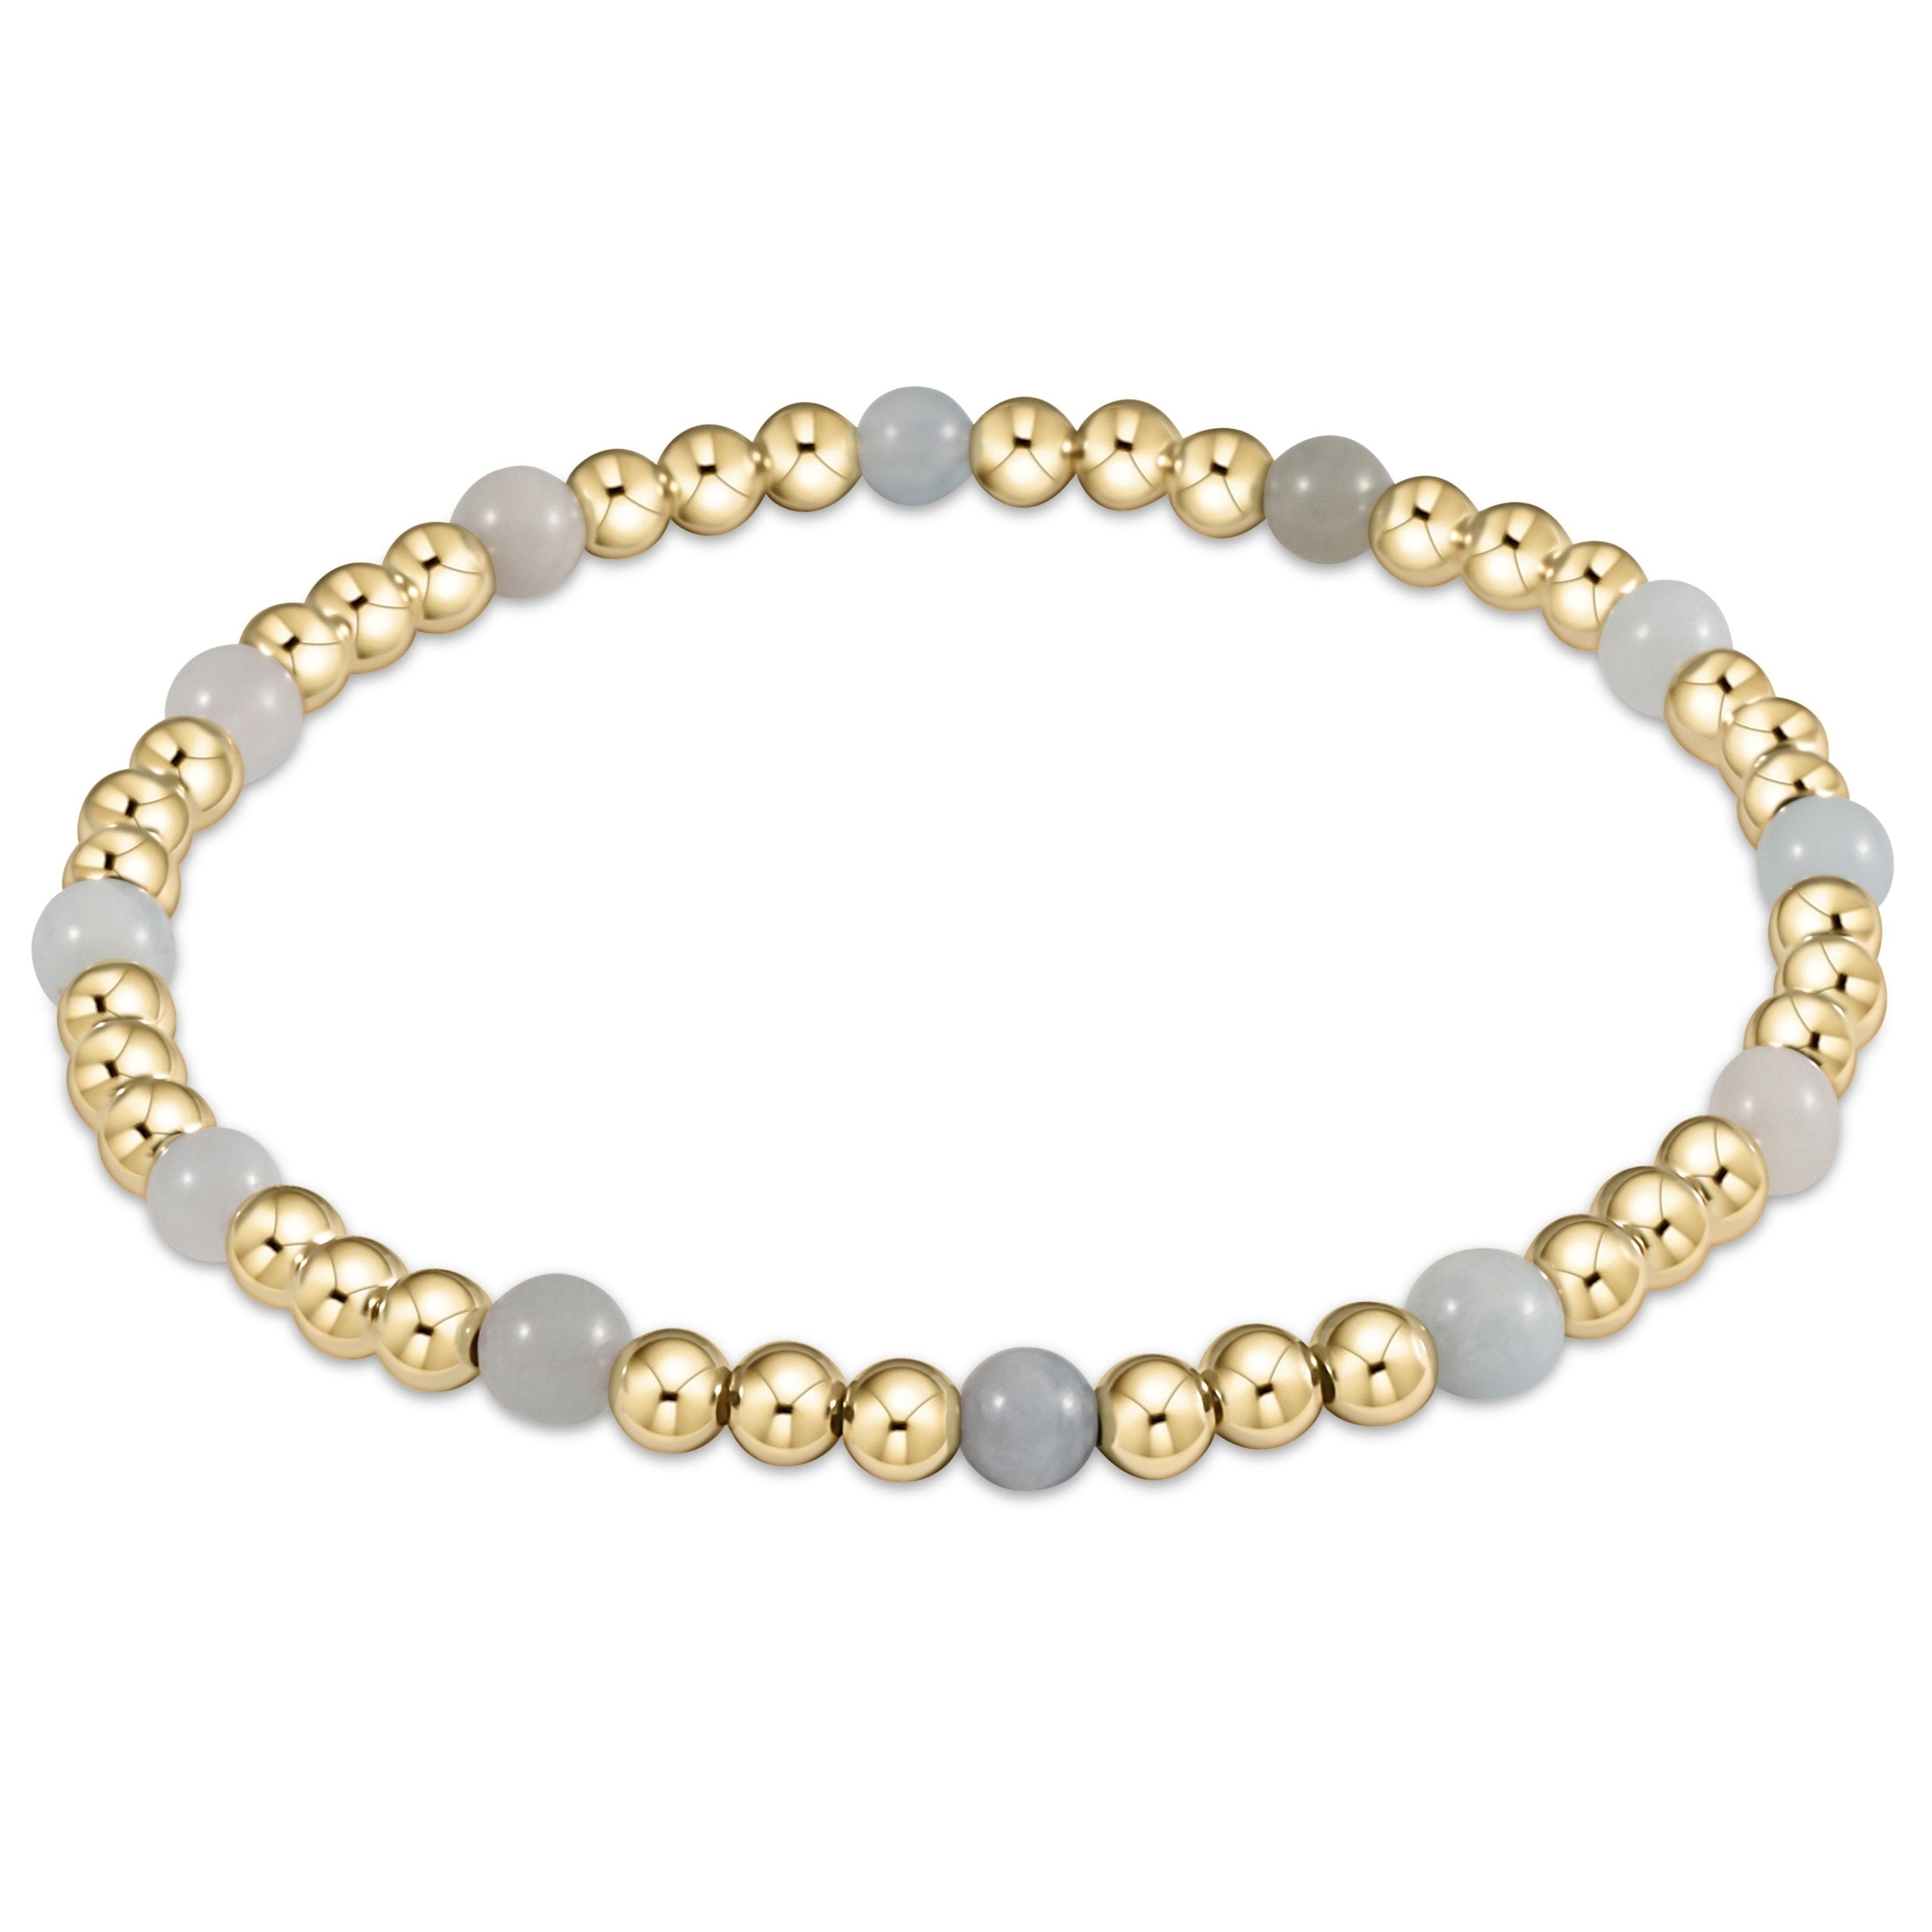 Sincerity Gold Bead Bracelet, 4mm - Aquamarine